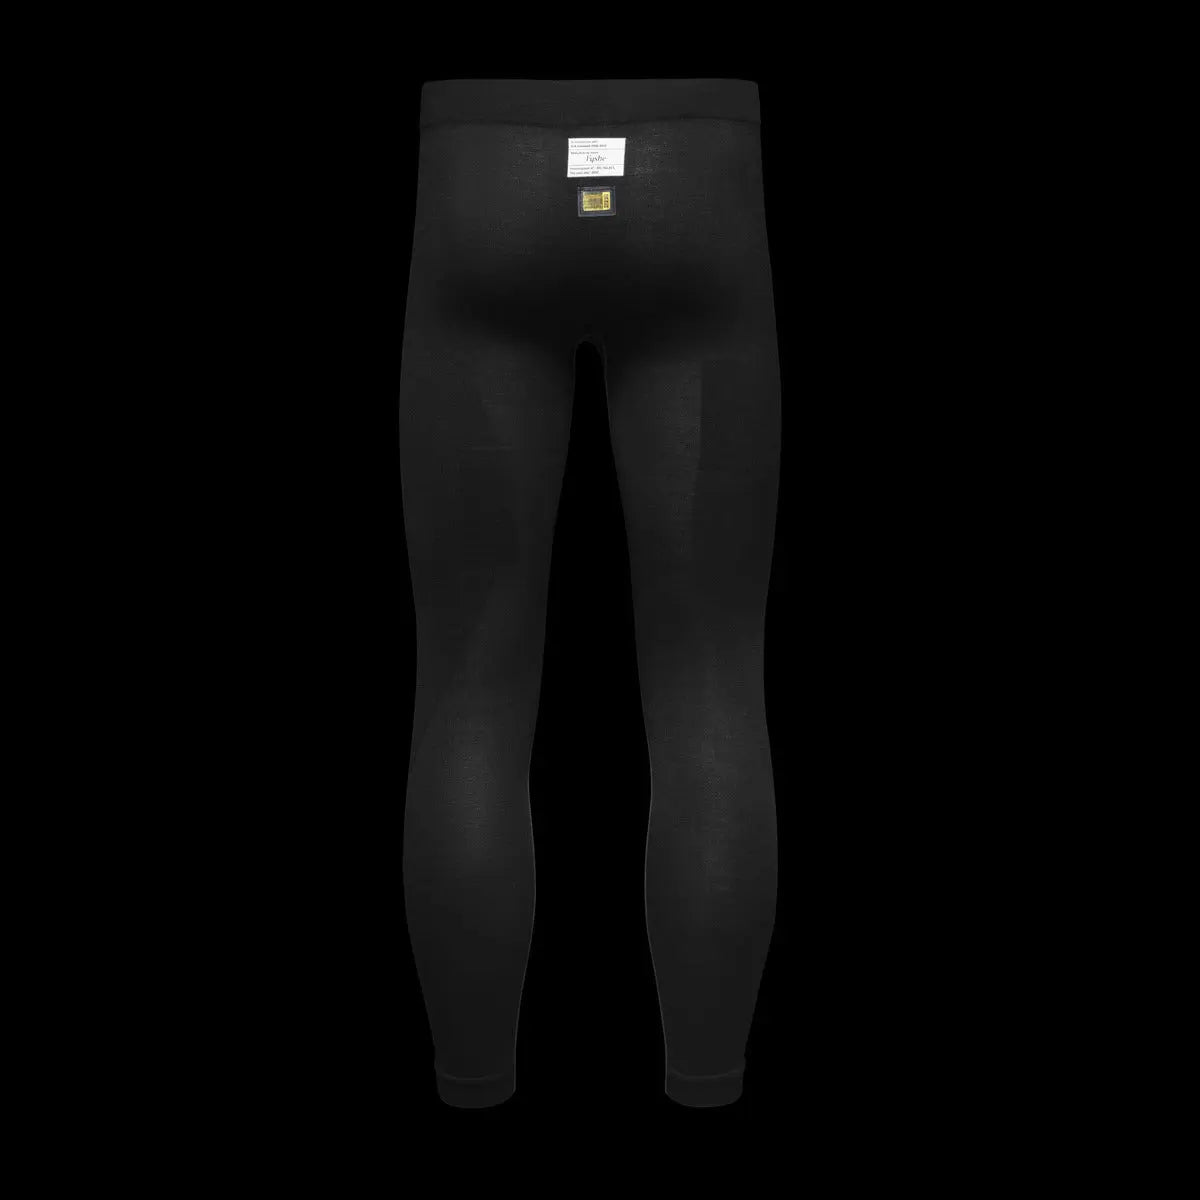 Fyshe Chimera Underwear Pants Black - Fyshe.com